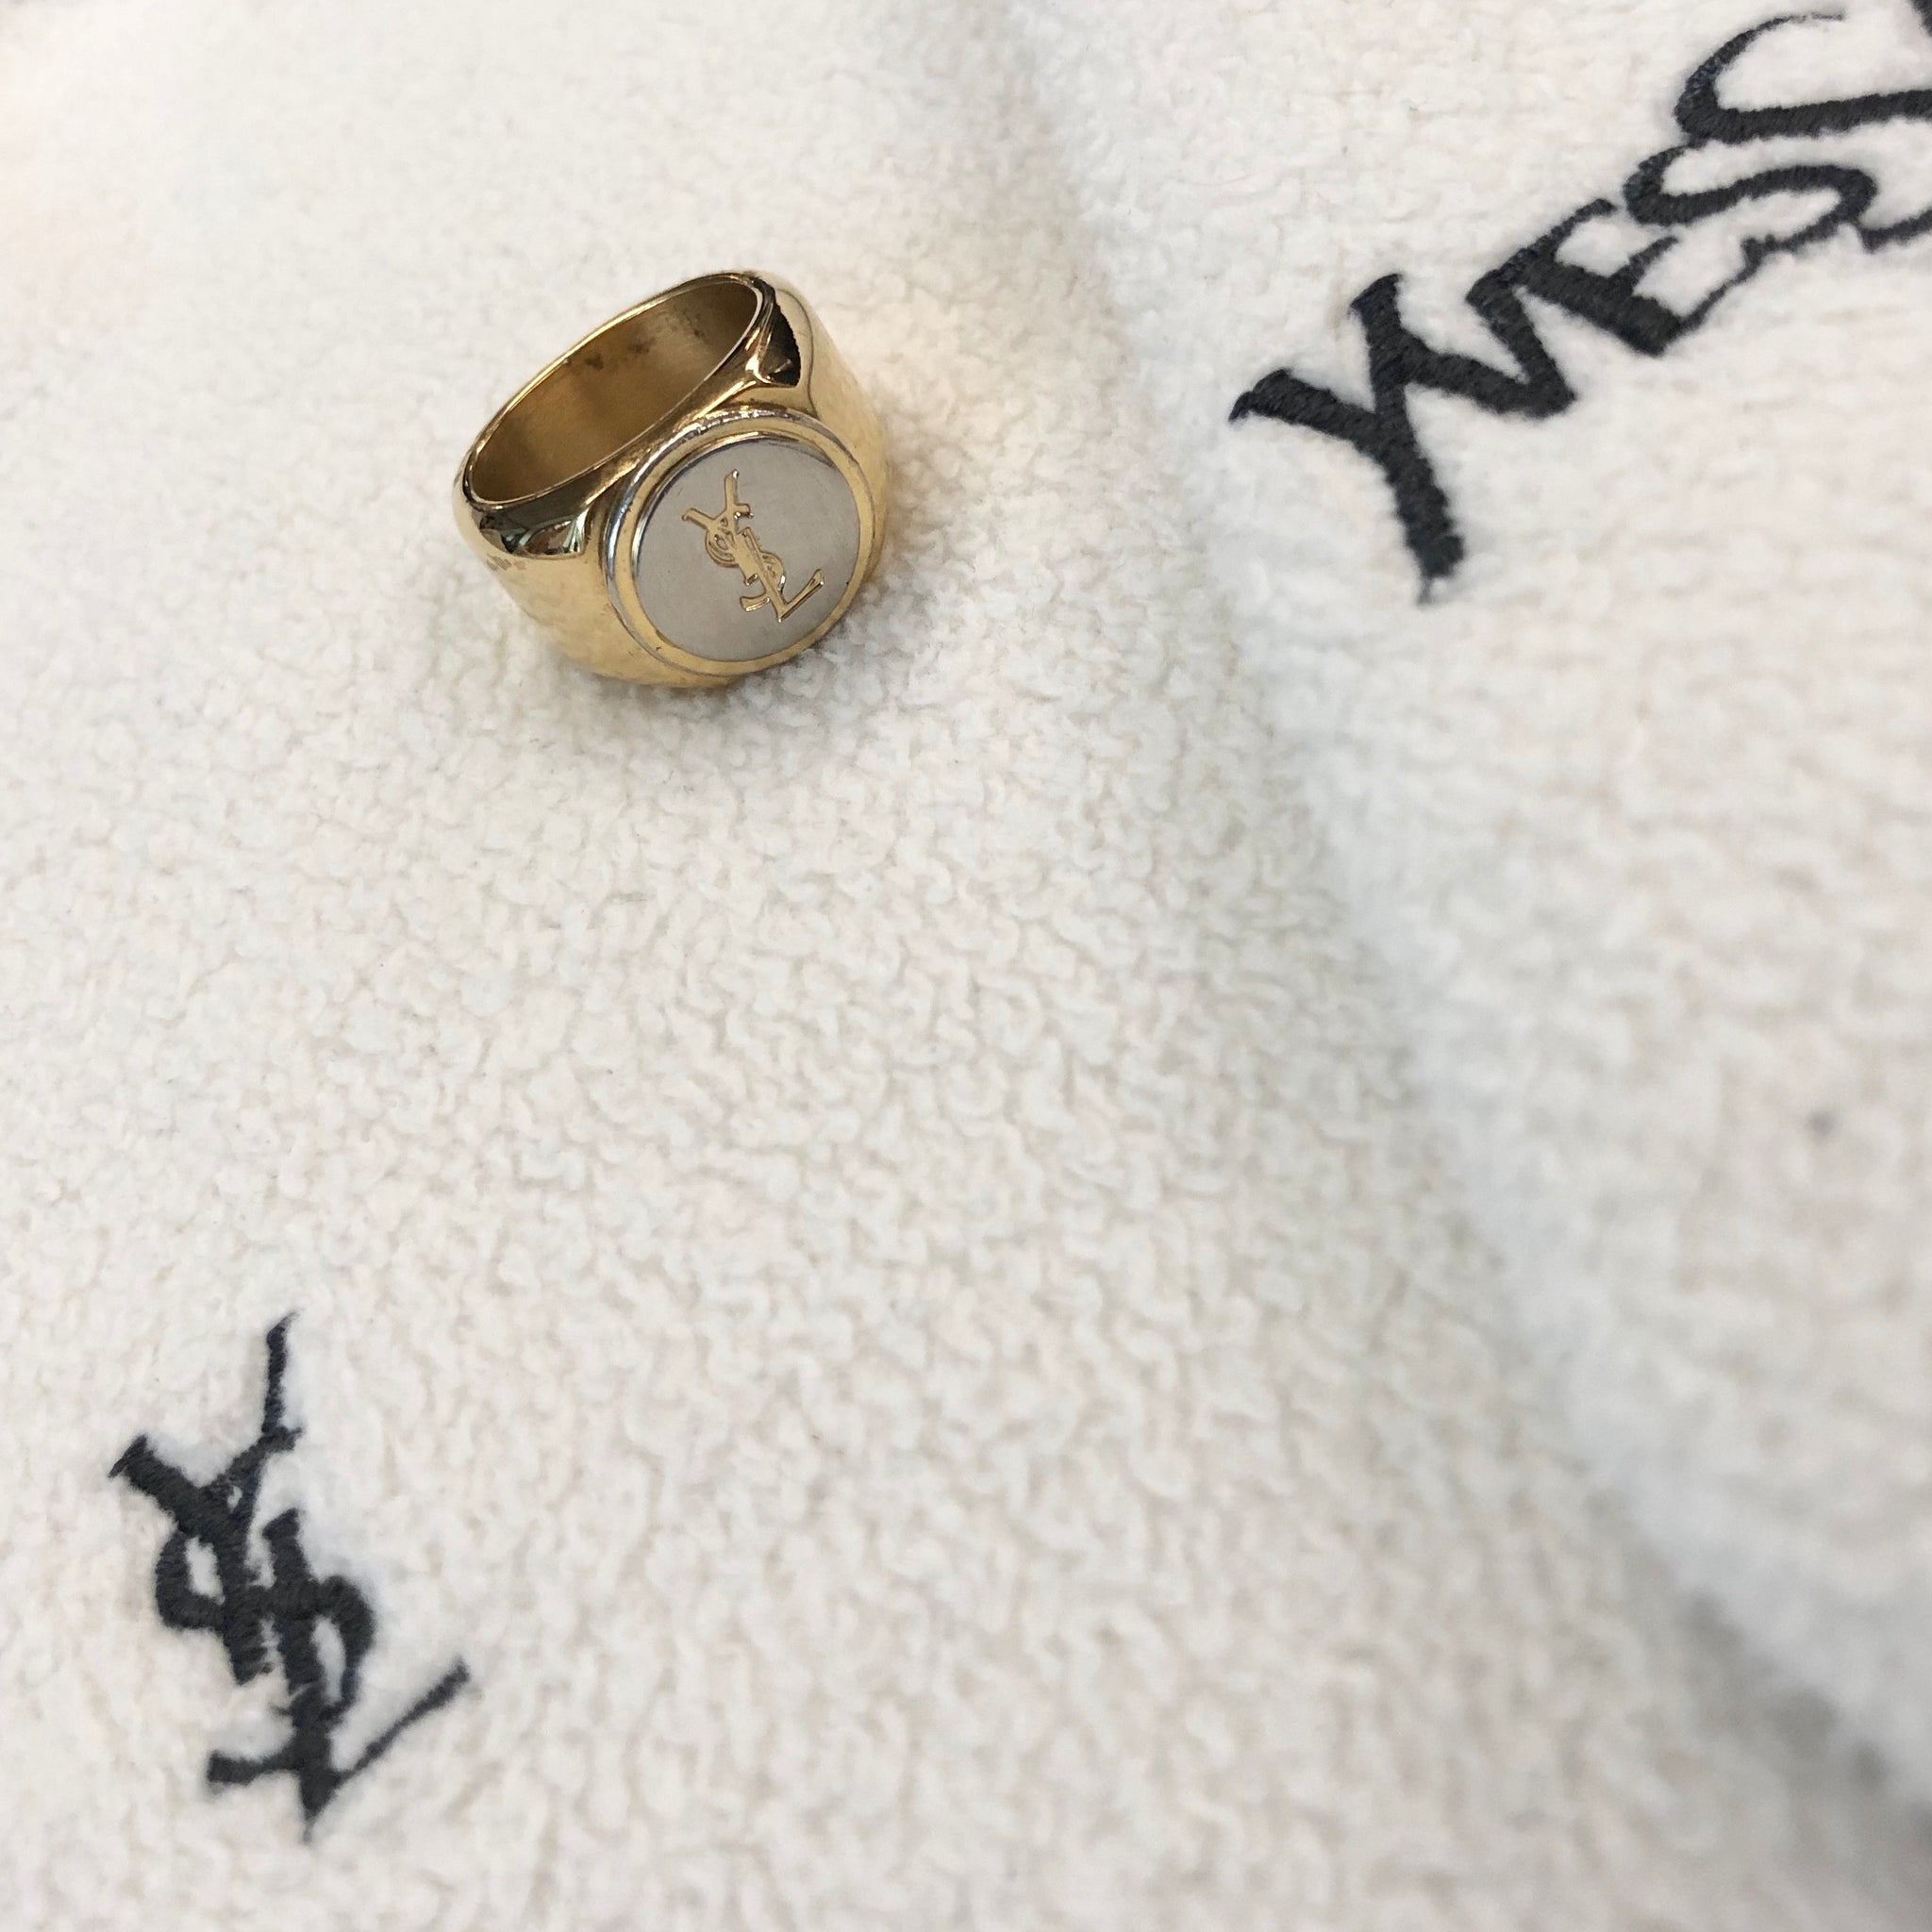 Yves Saint Laurent / Reworked jewelry